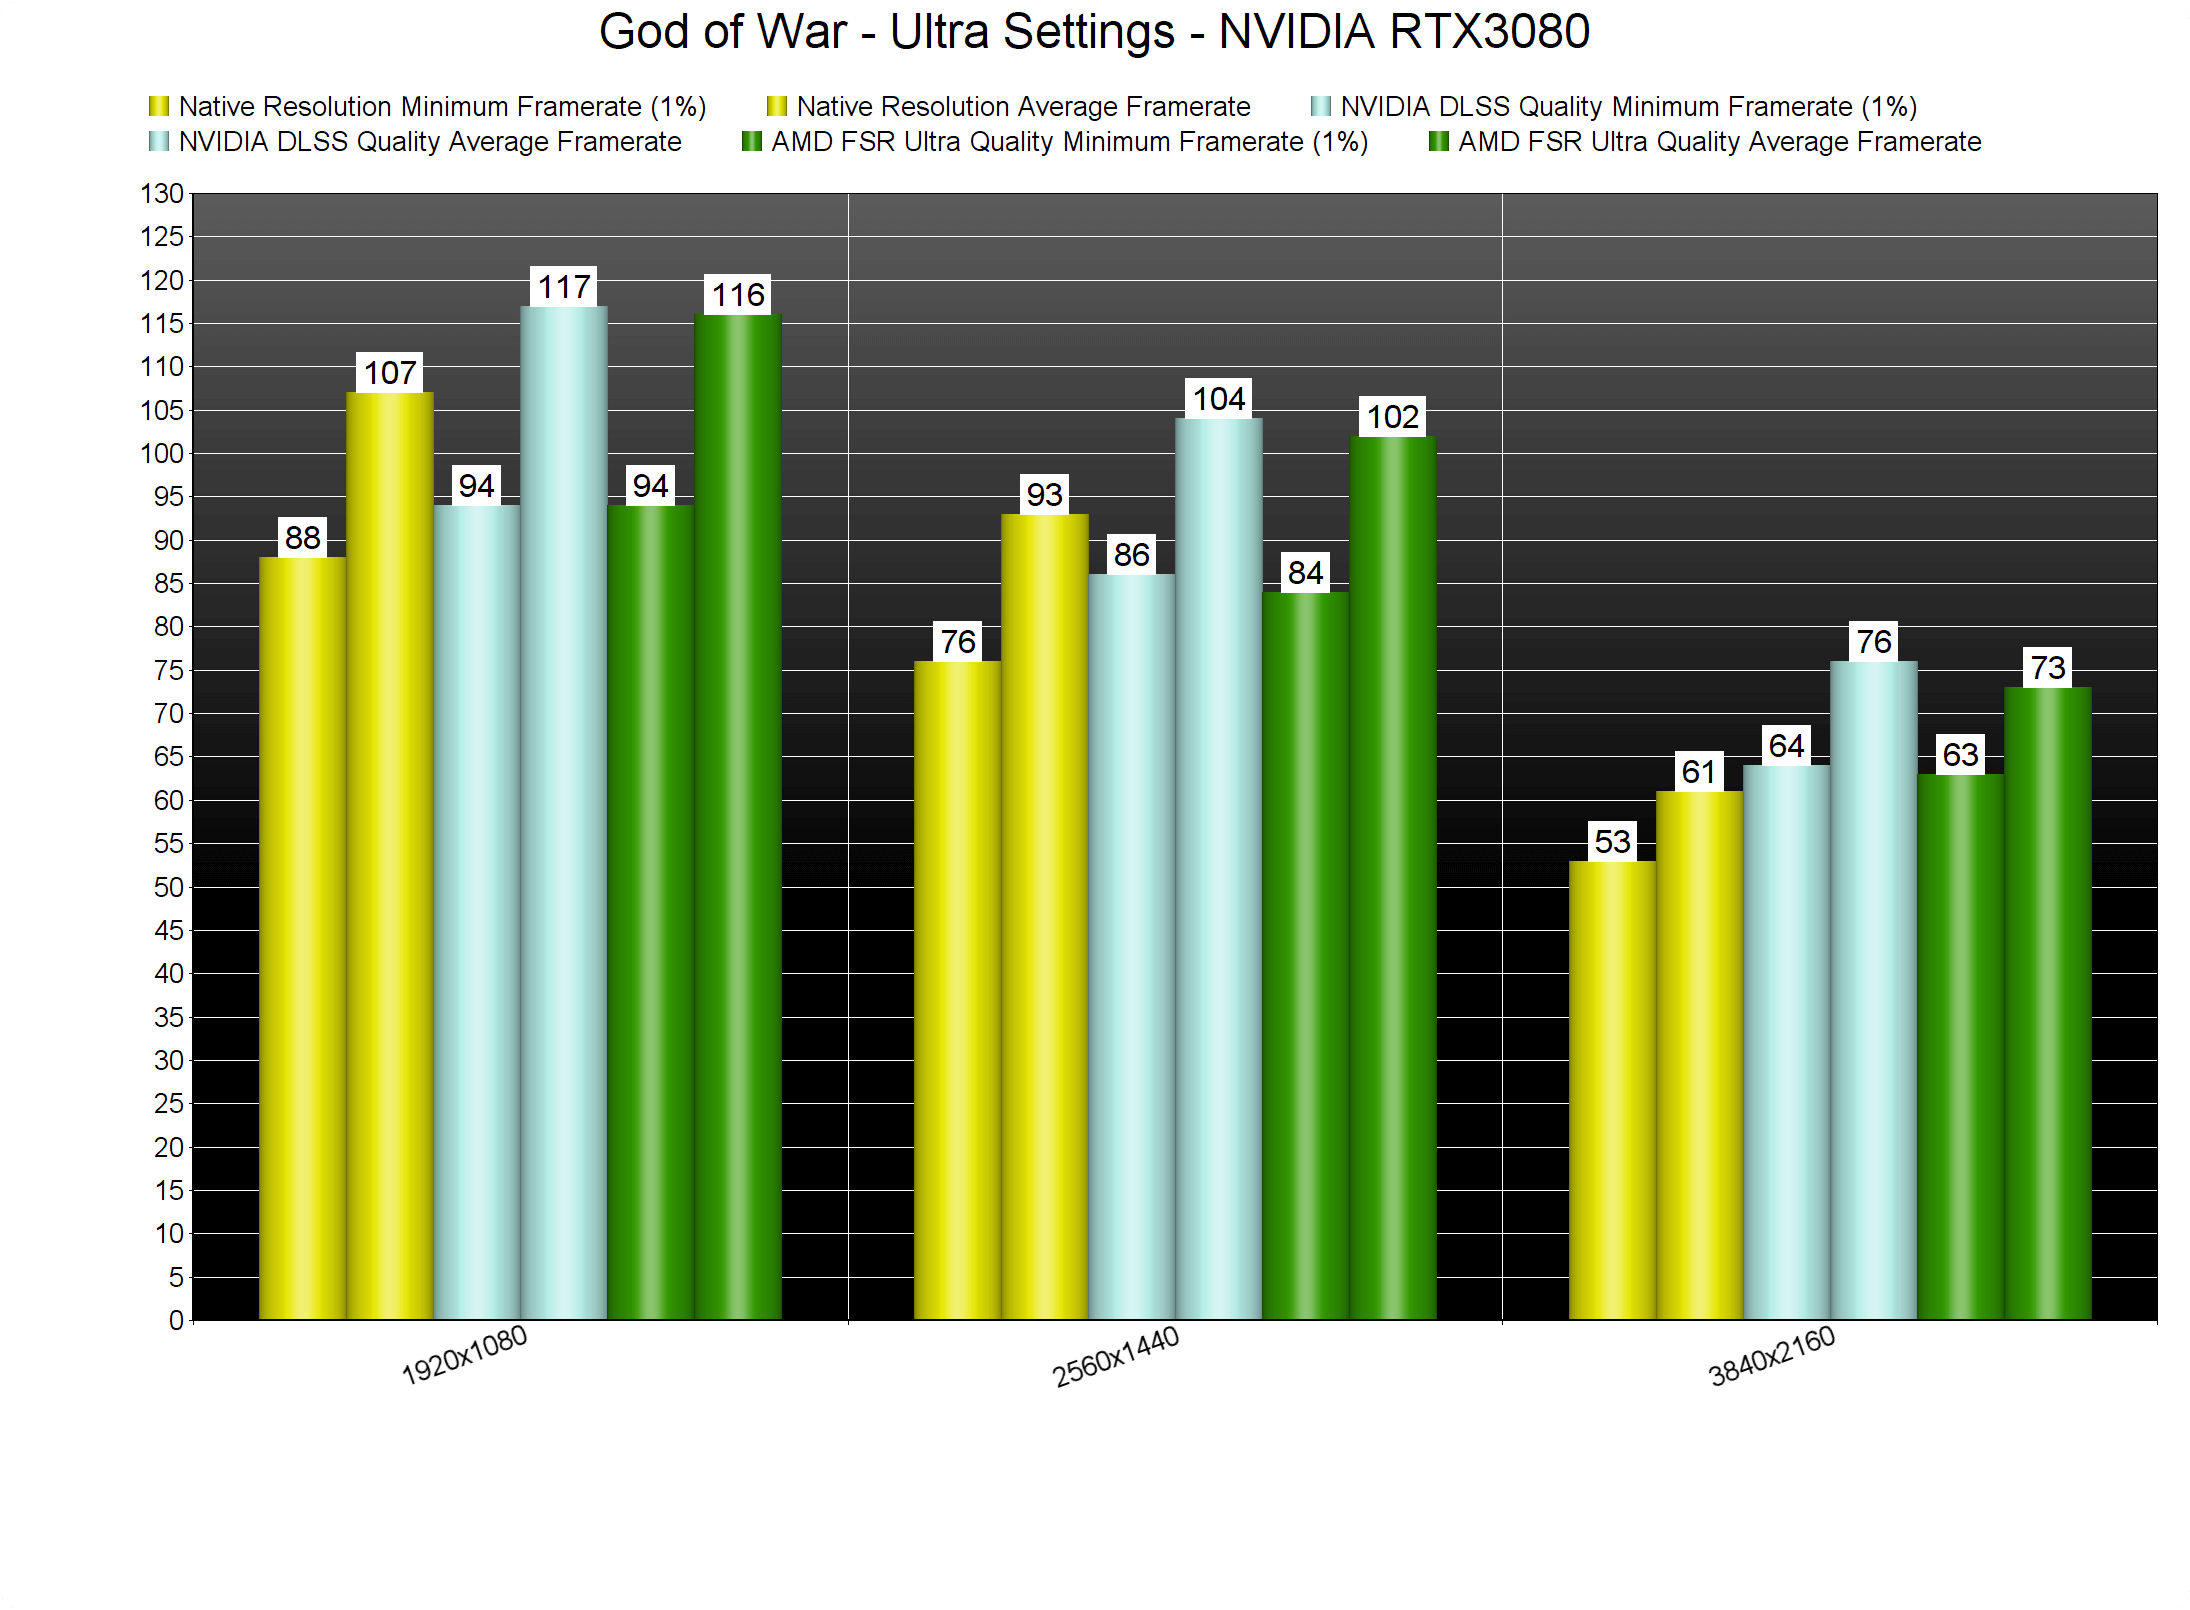 God of War PC Performance Analysis